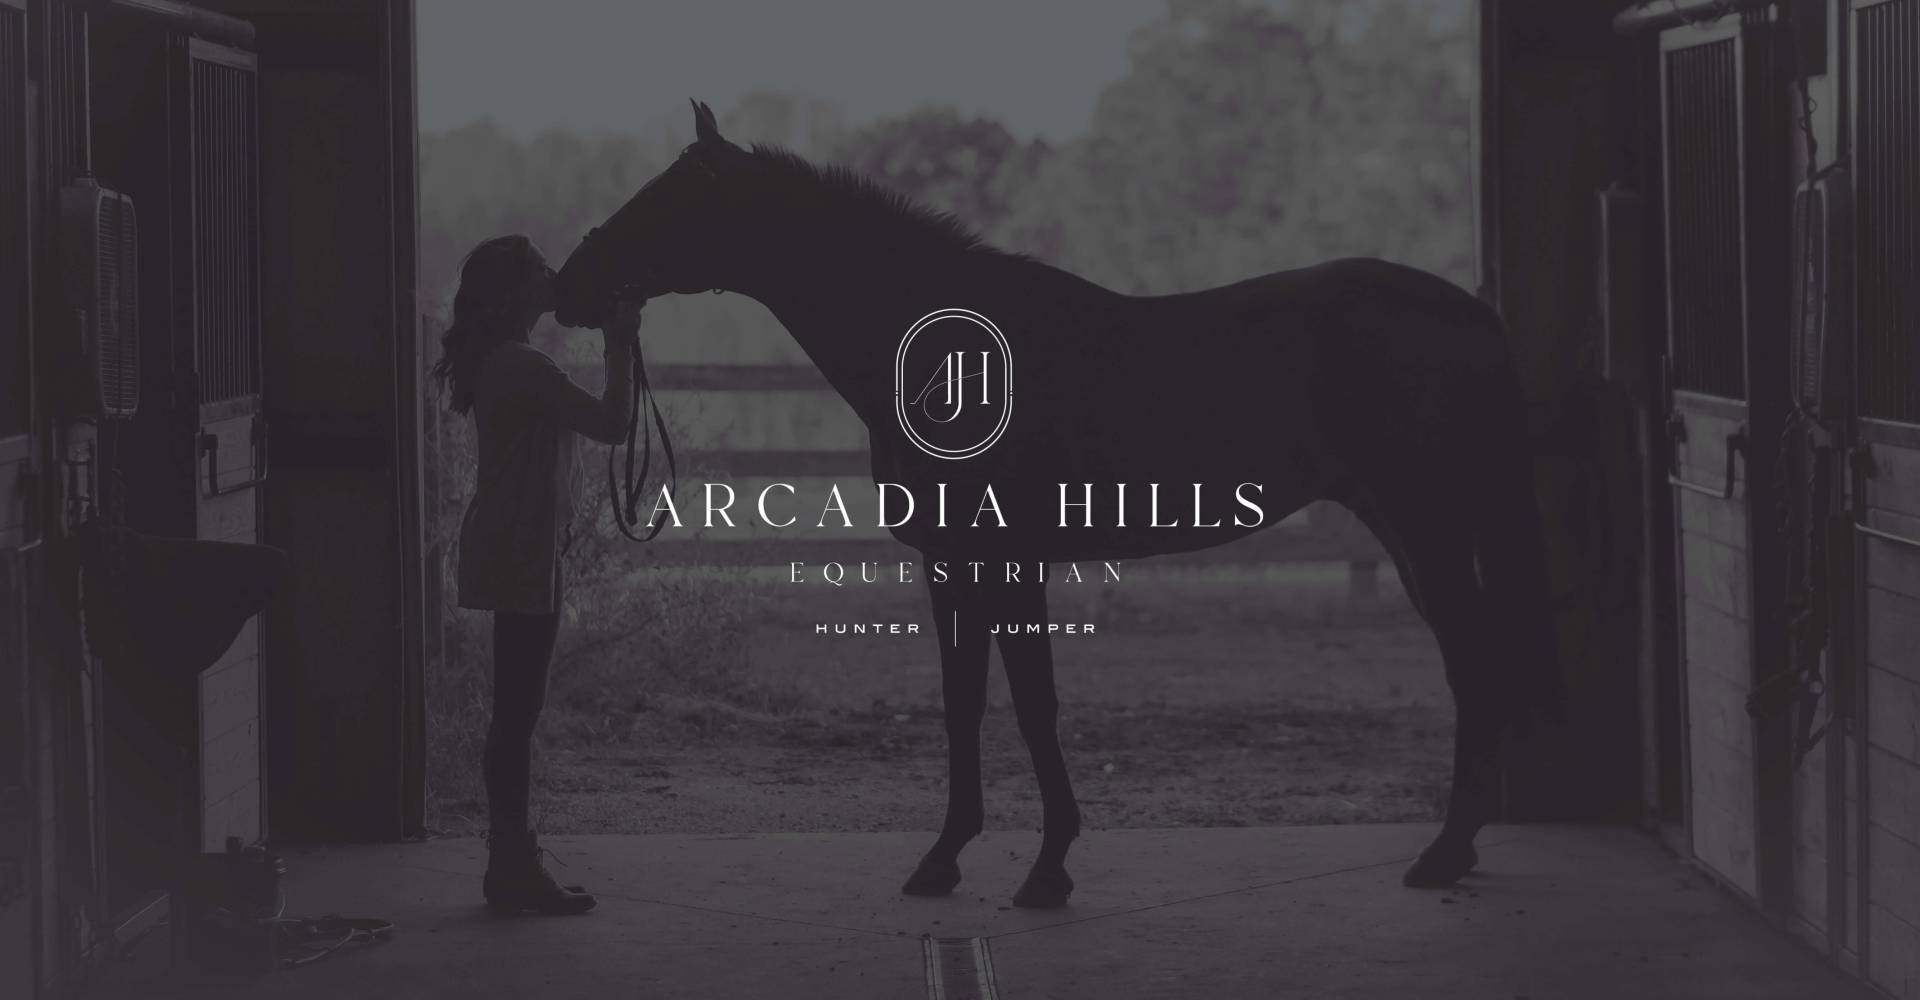 Arcadia Hills Equestrain - Digital Marketing for Equine Businesses - Brandlink Media Marketing Agency 1